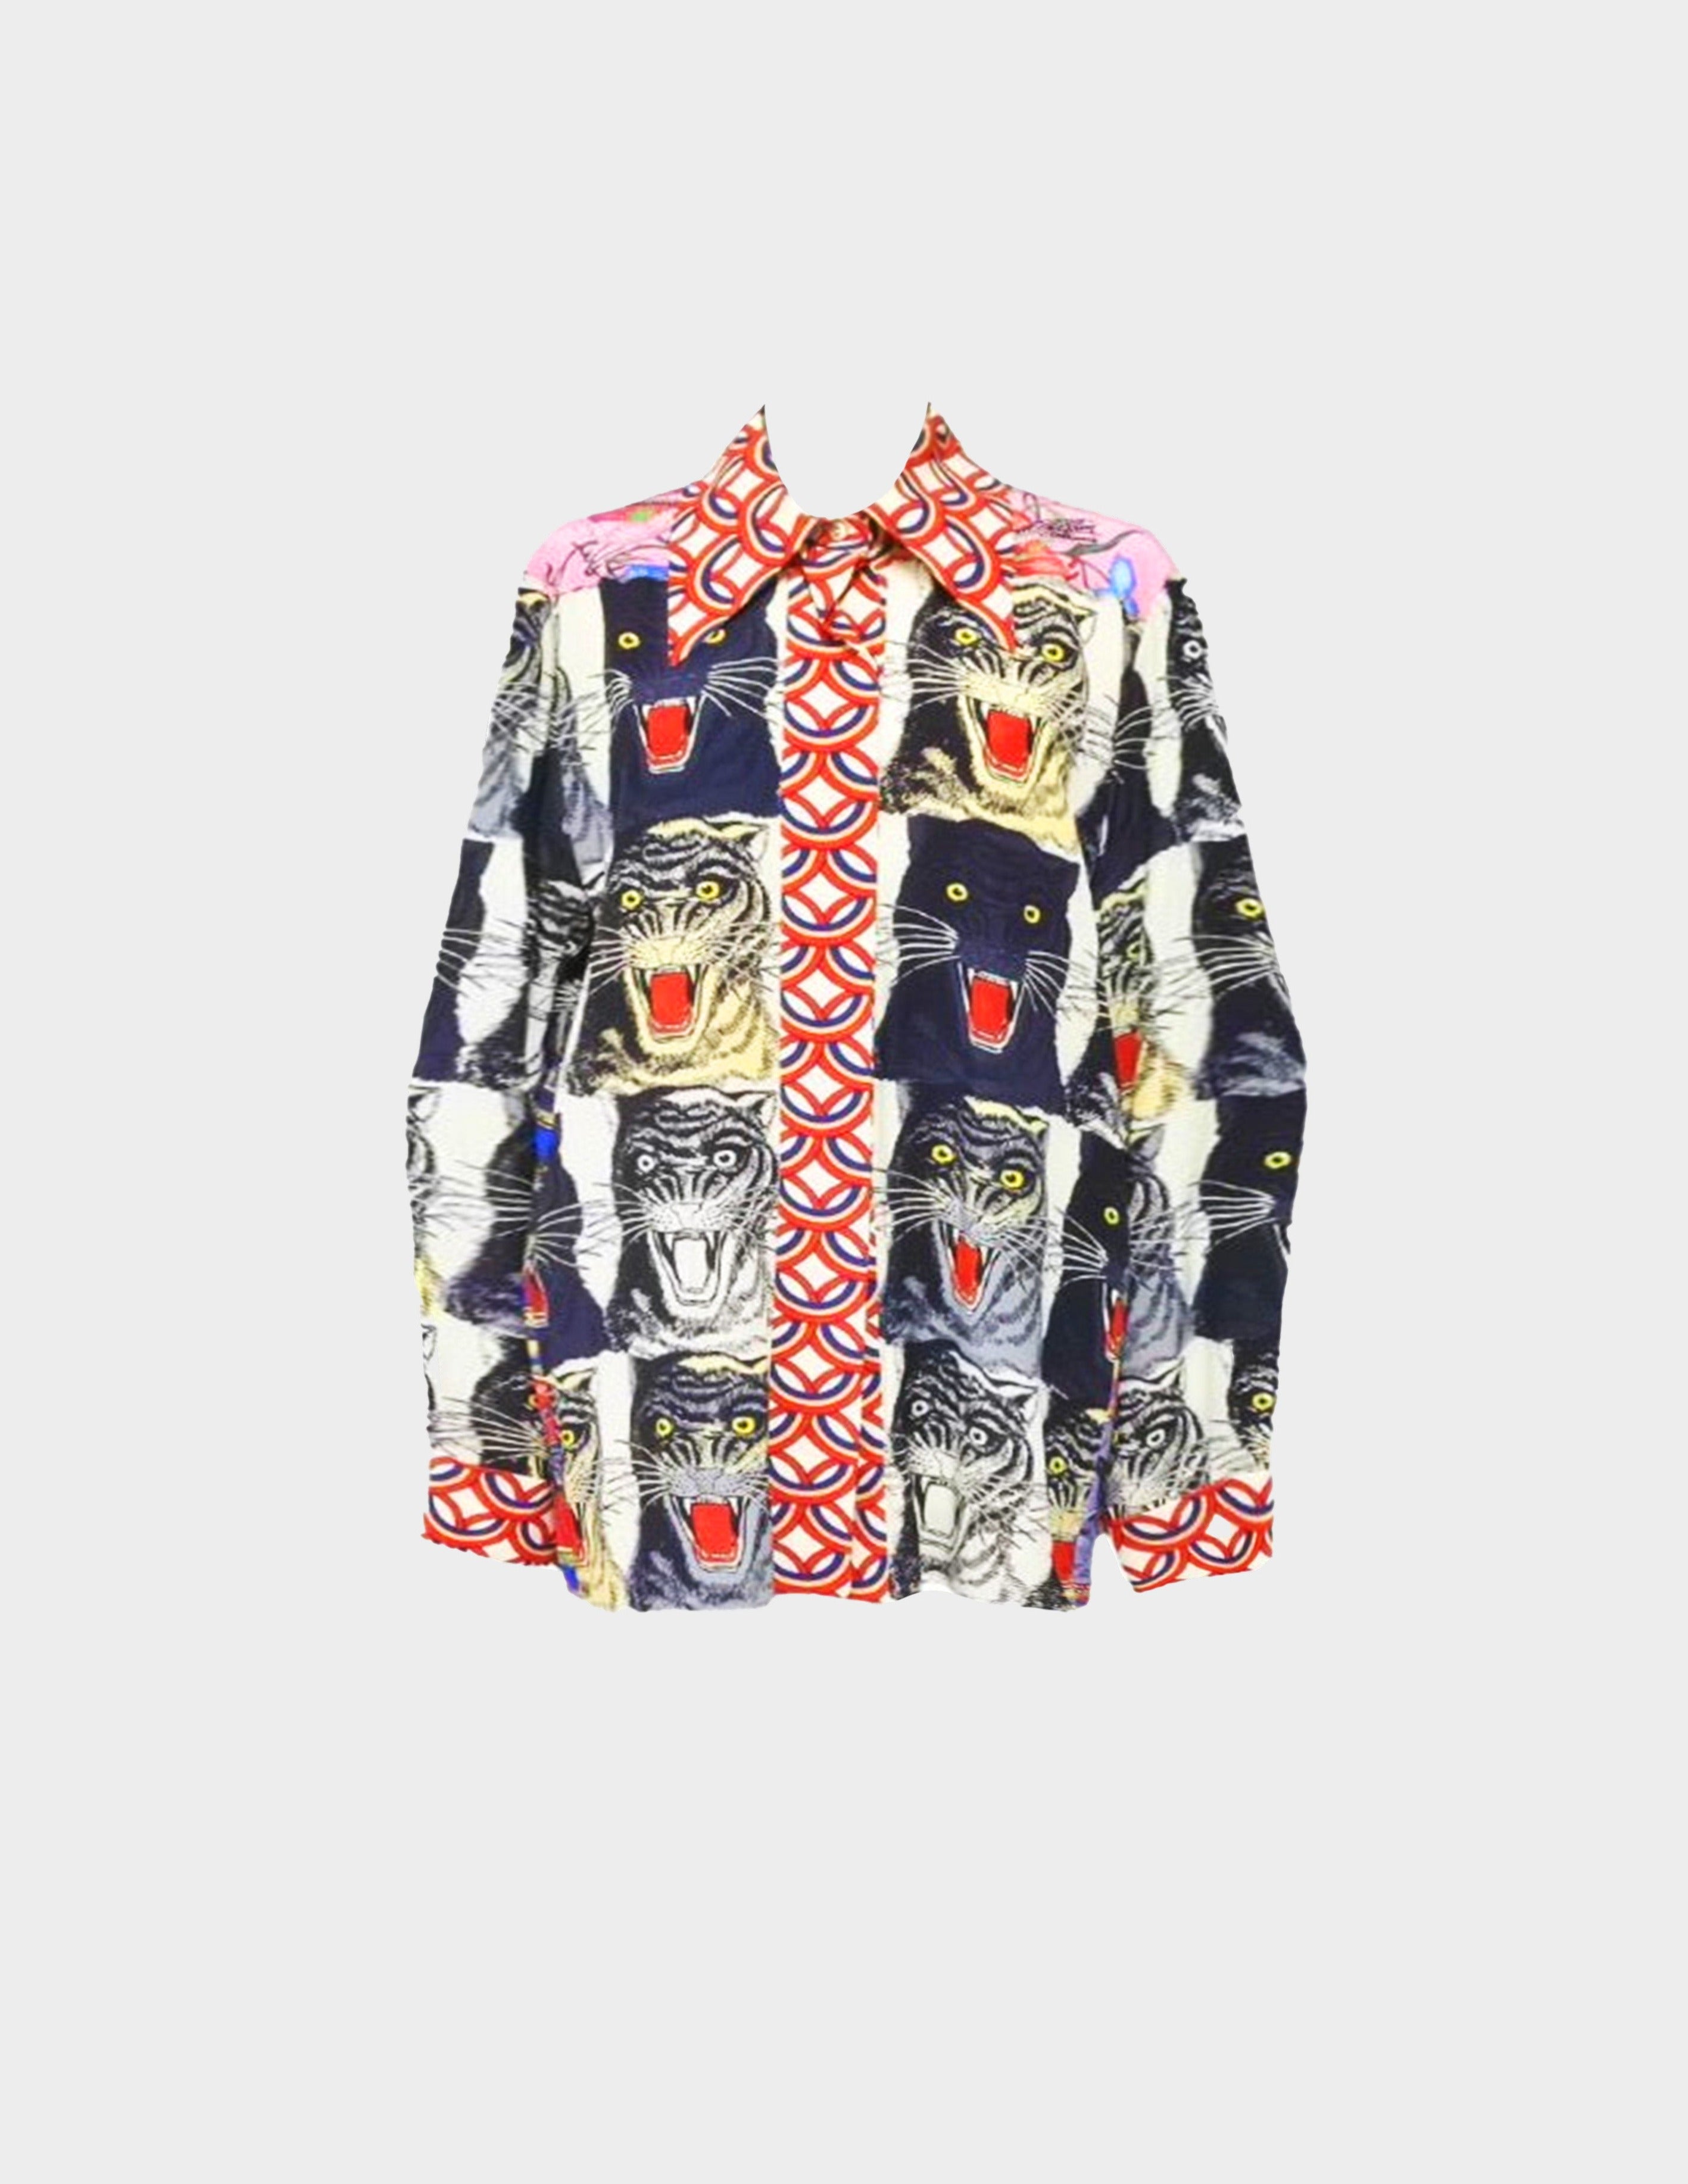 Gucci Pre-Fall 2017 Silk Tiger Print Blouse